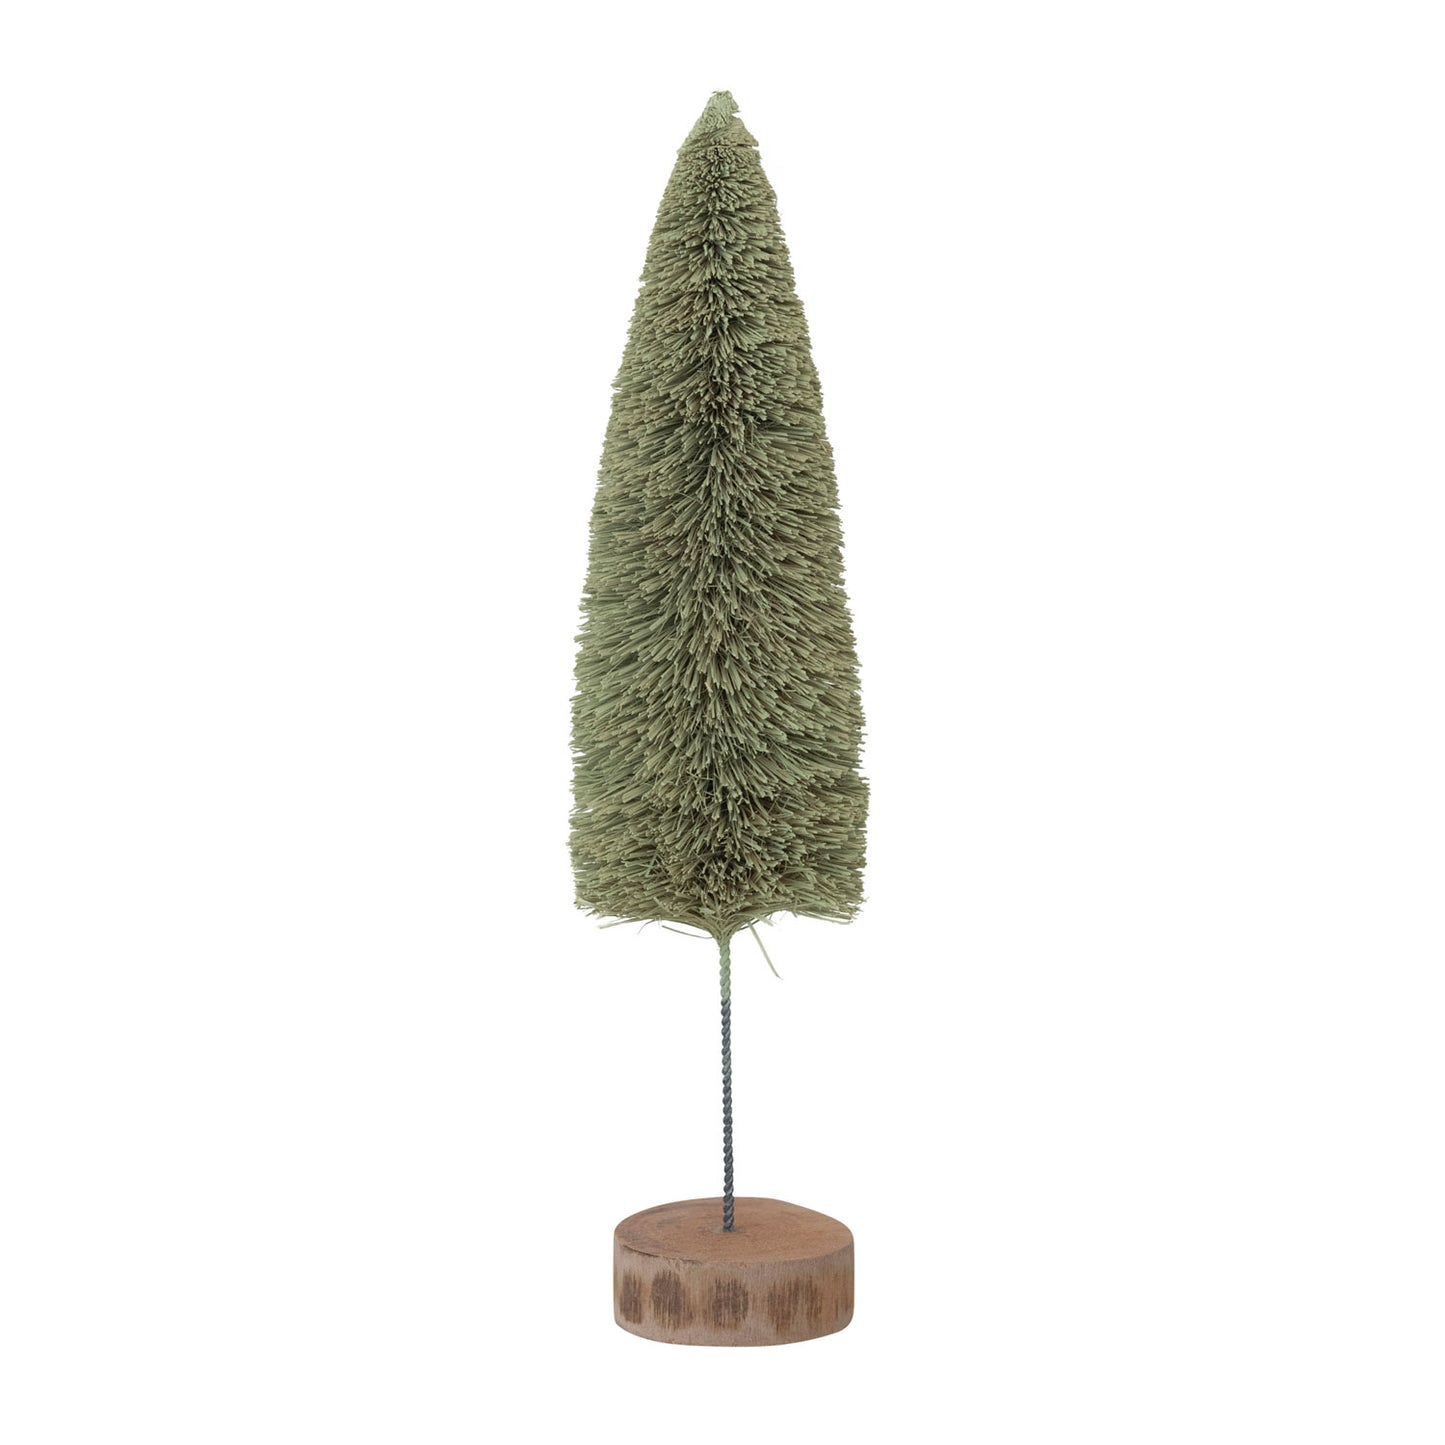 Creative Co-op Sisal Bottle Brush Tree with Wood Base - 2.5" x 10" - Pistachio Green